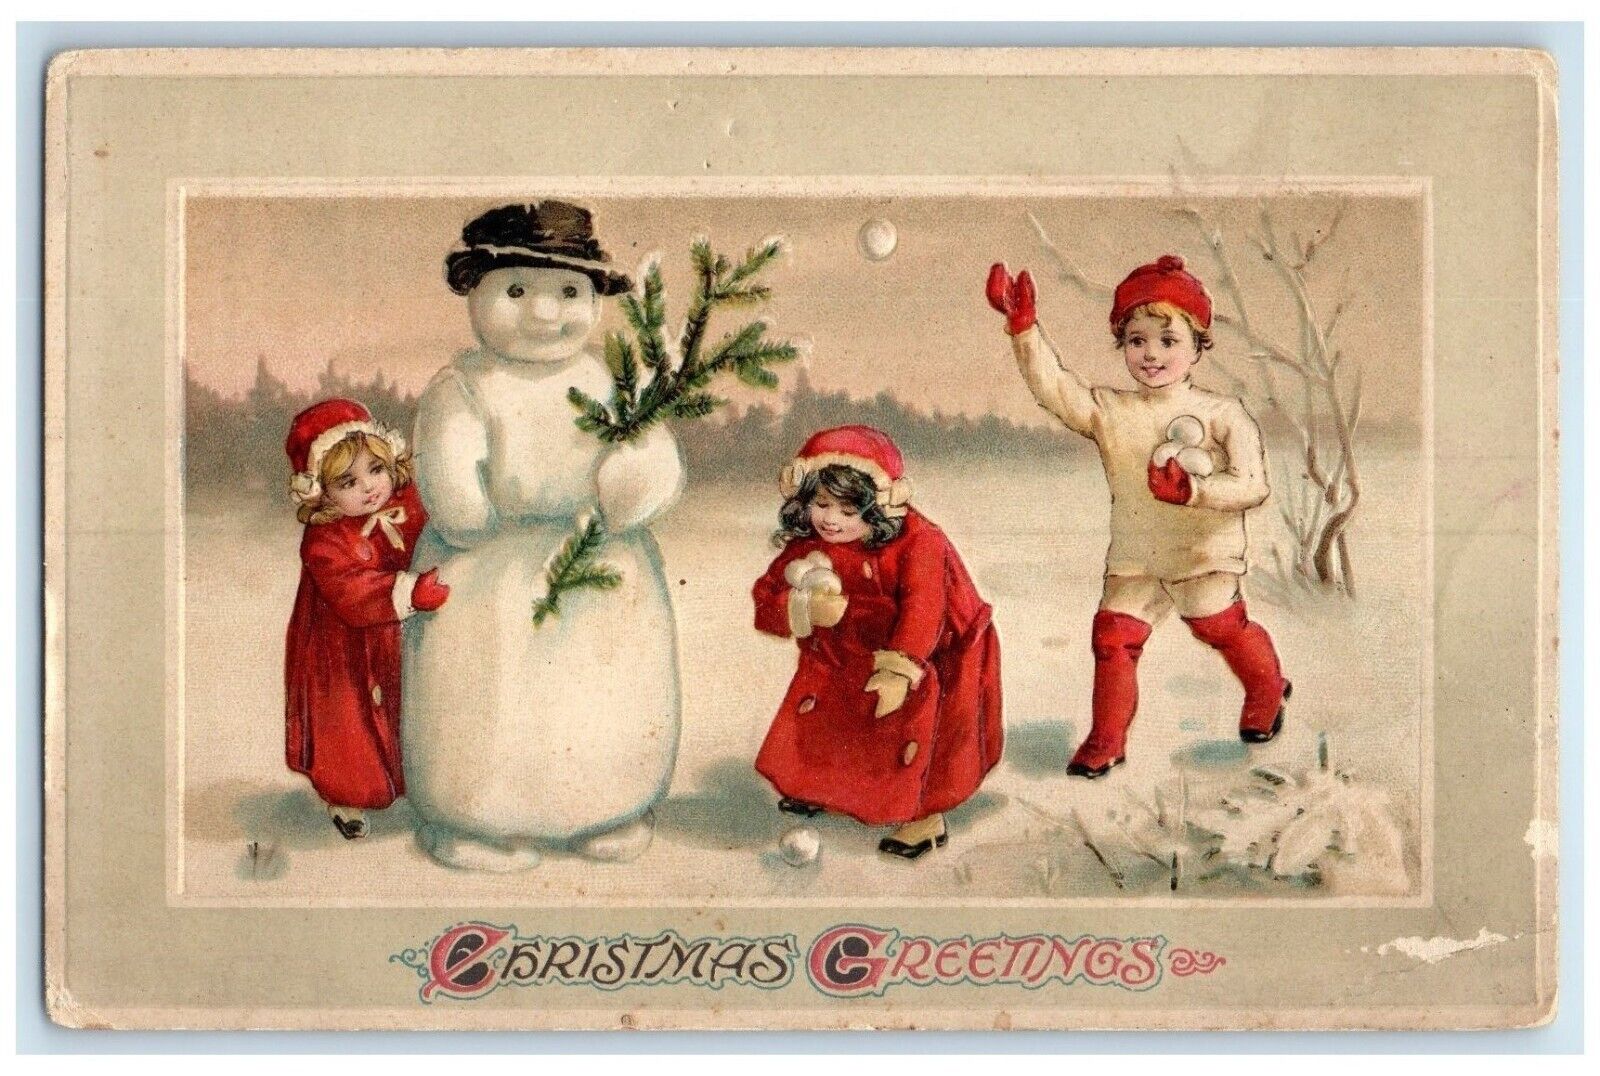 1912 Christmas Greetings Snowman Children Snowball Fighting Embossed Postcard